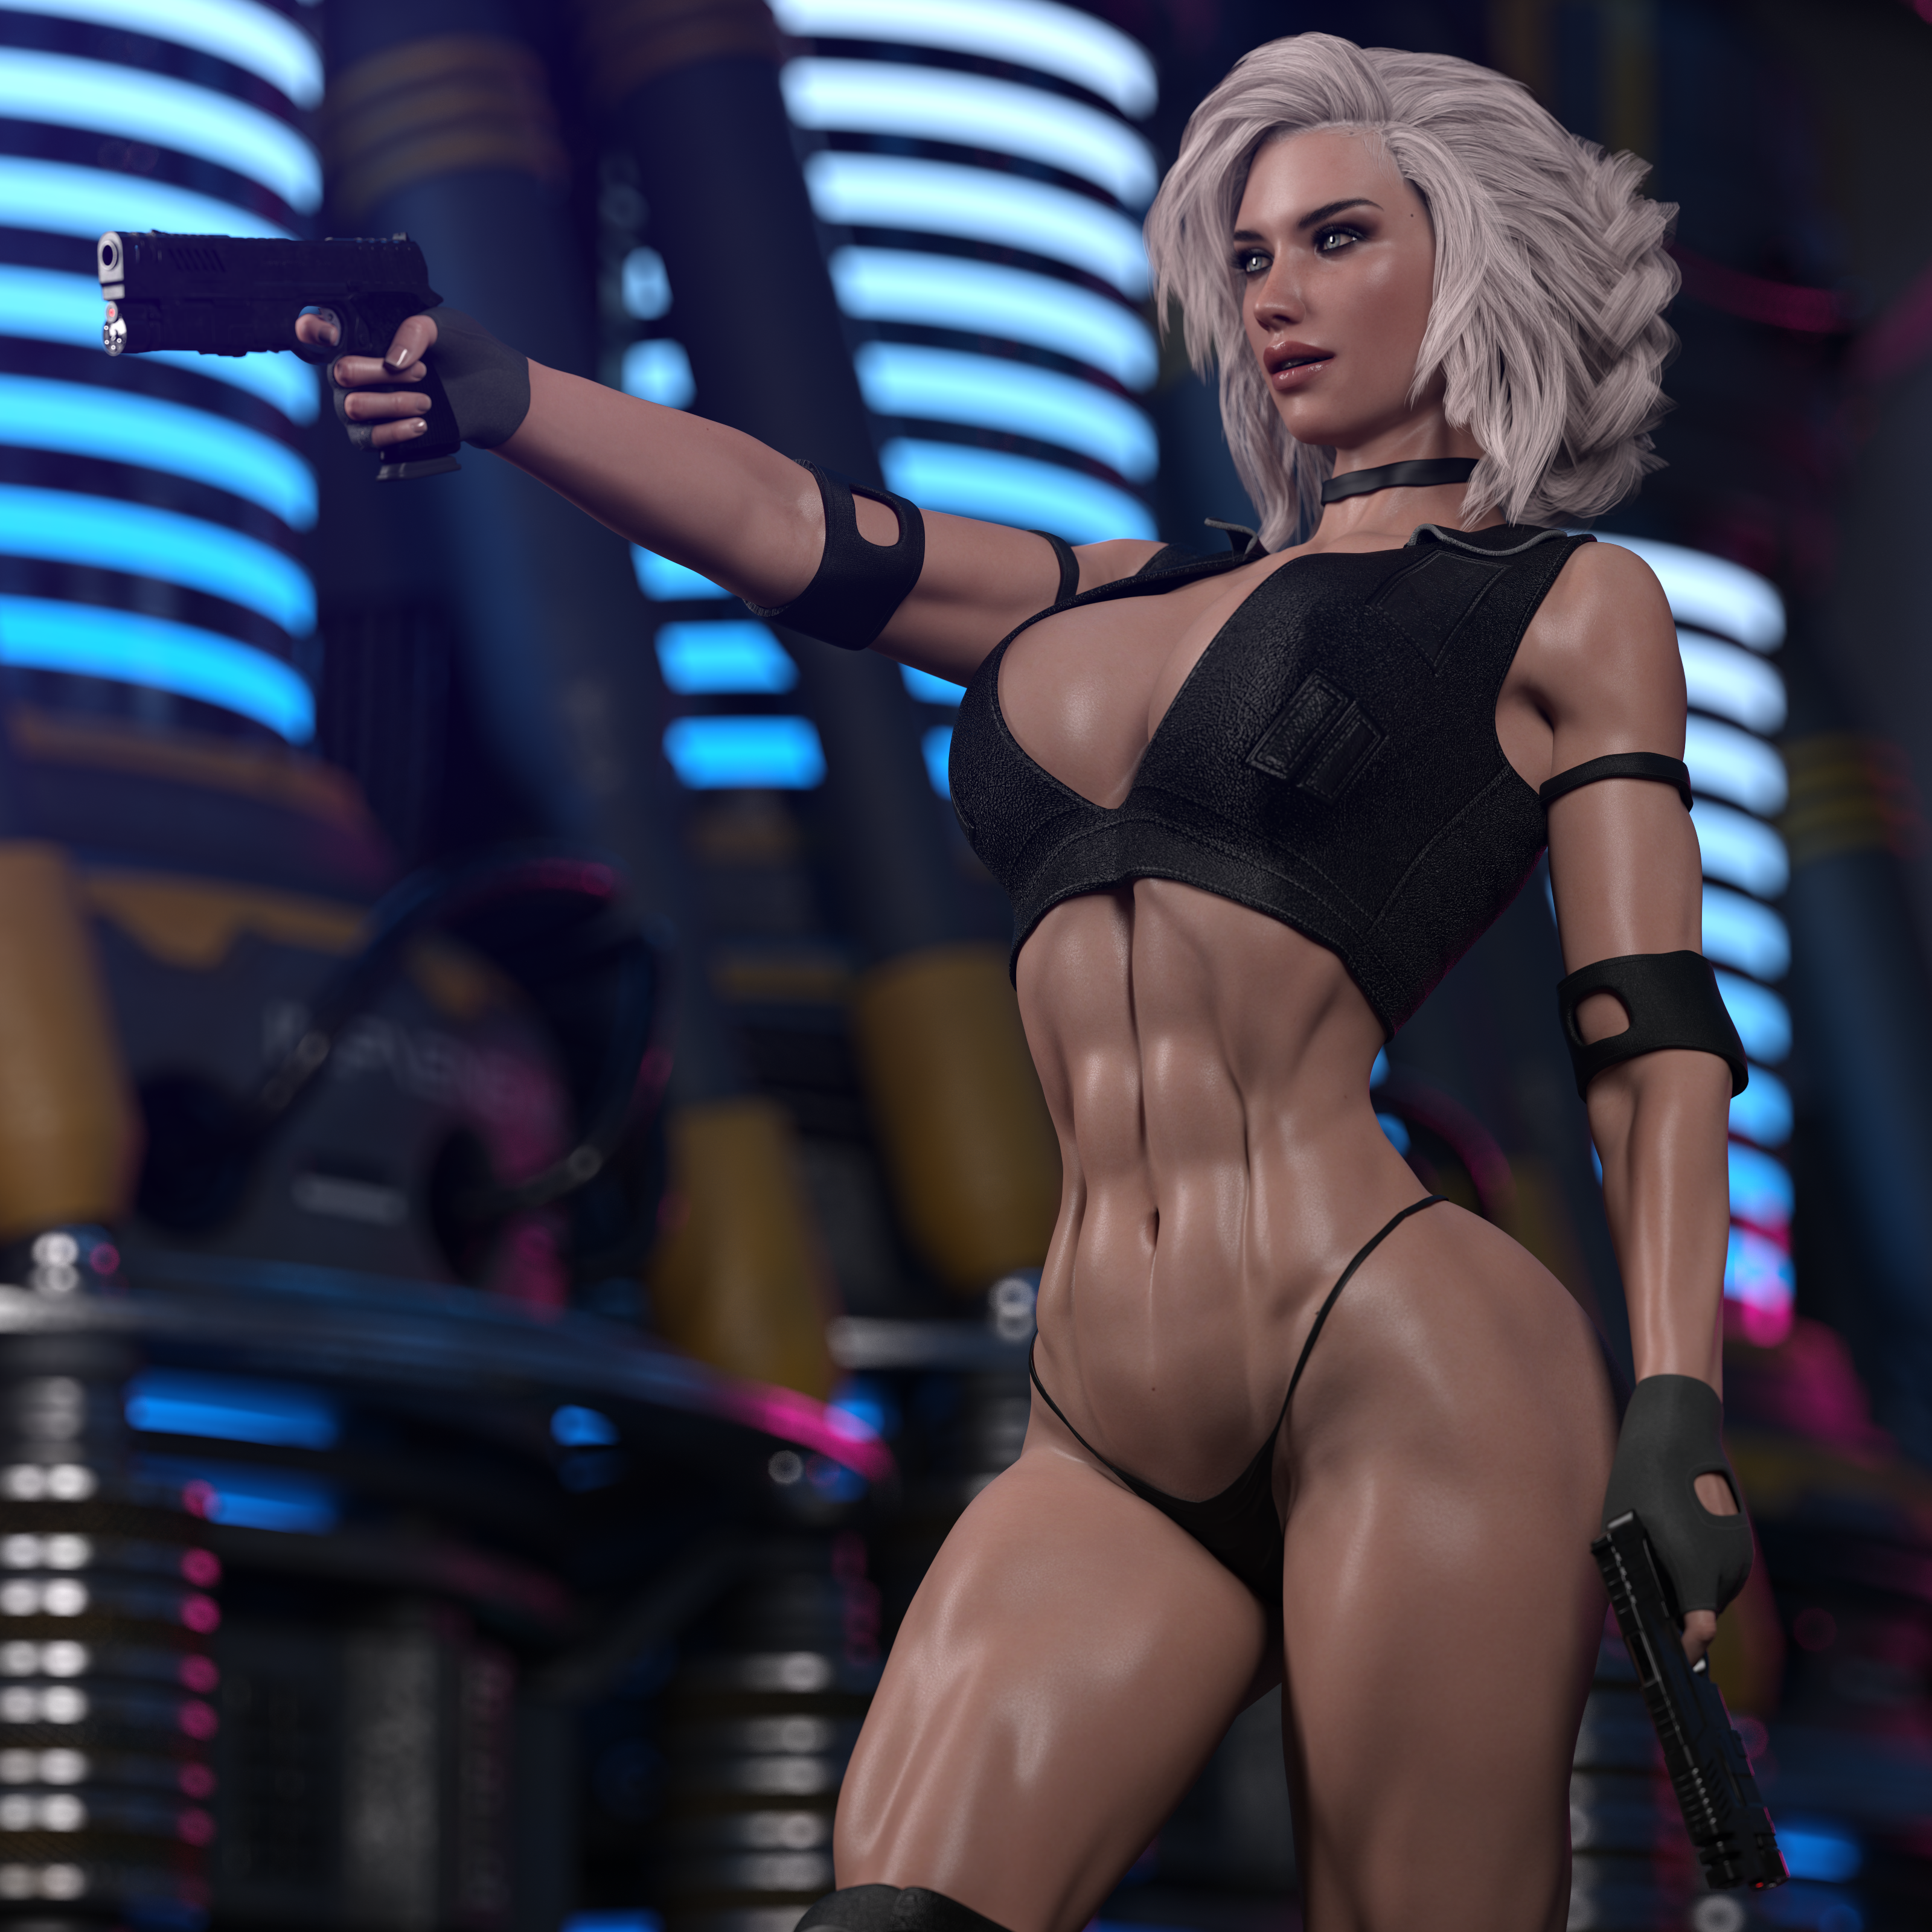 General 3200x3200 Str4hl blonde muscles abs gun bikini bottoms CGI girls with guns